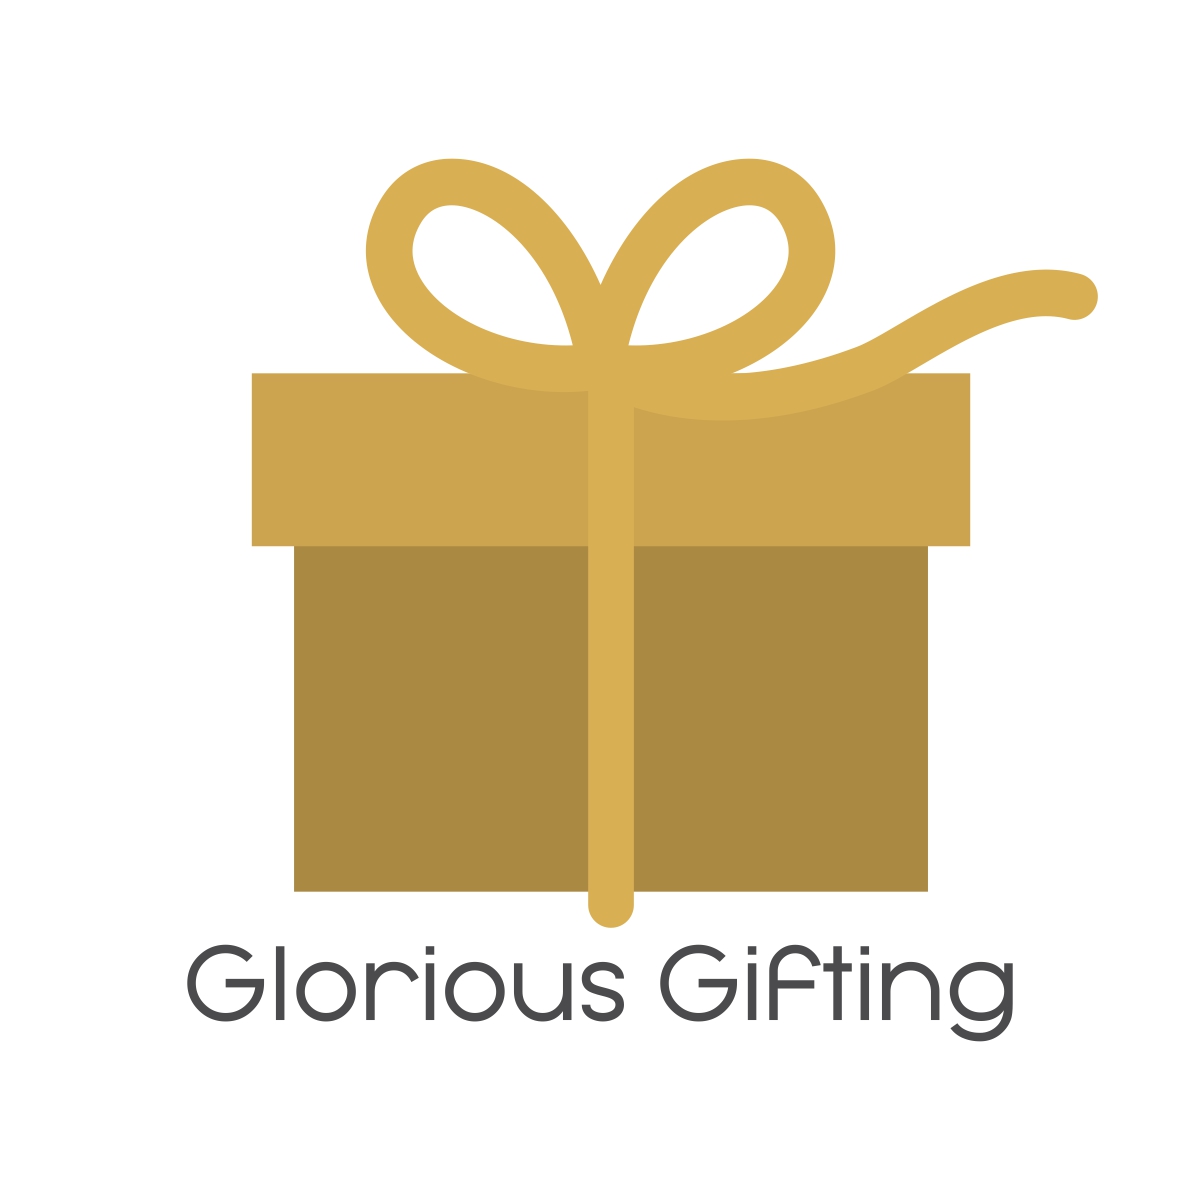 Glorious Gifting logo